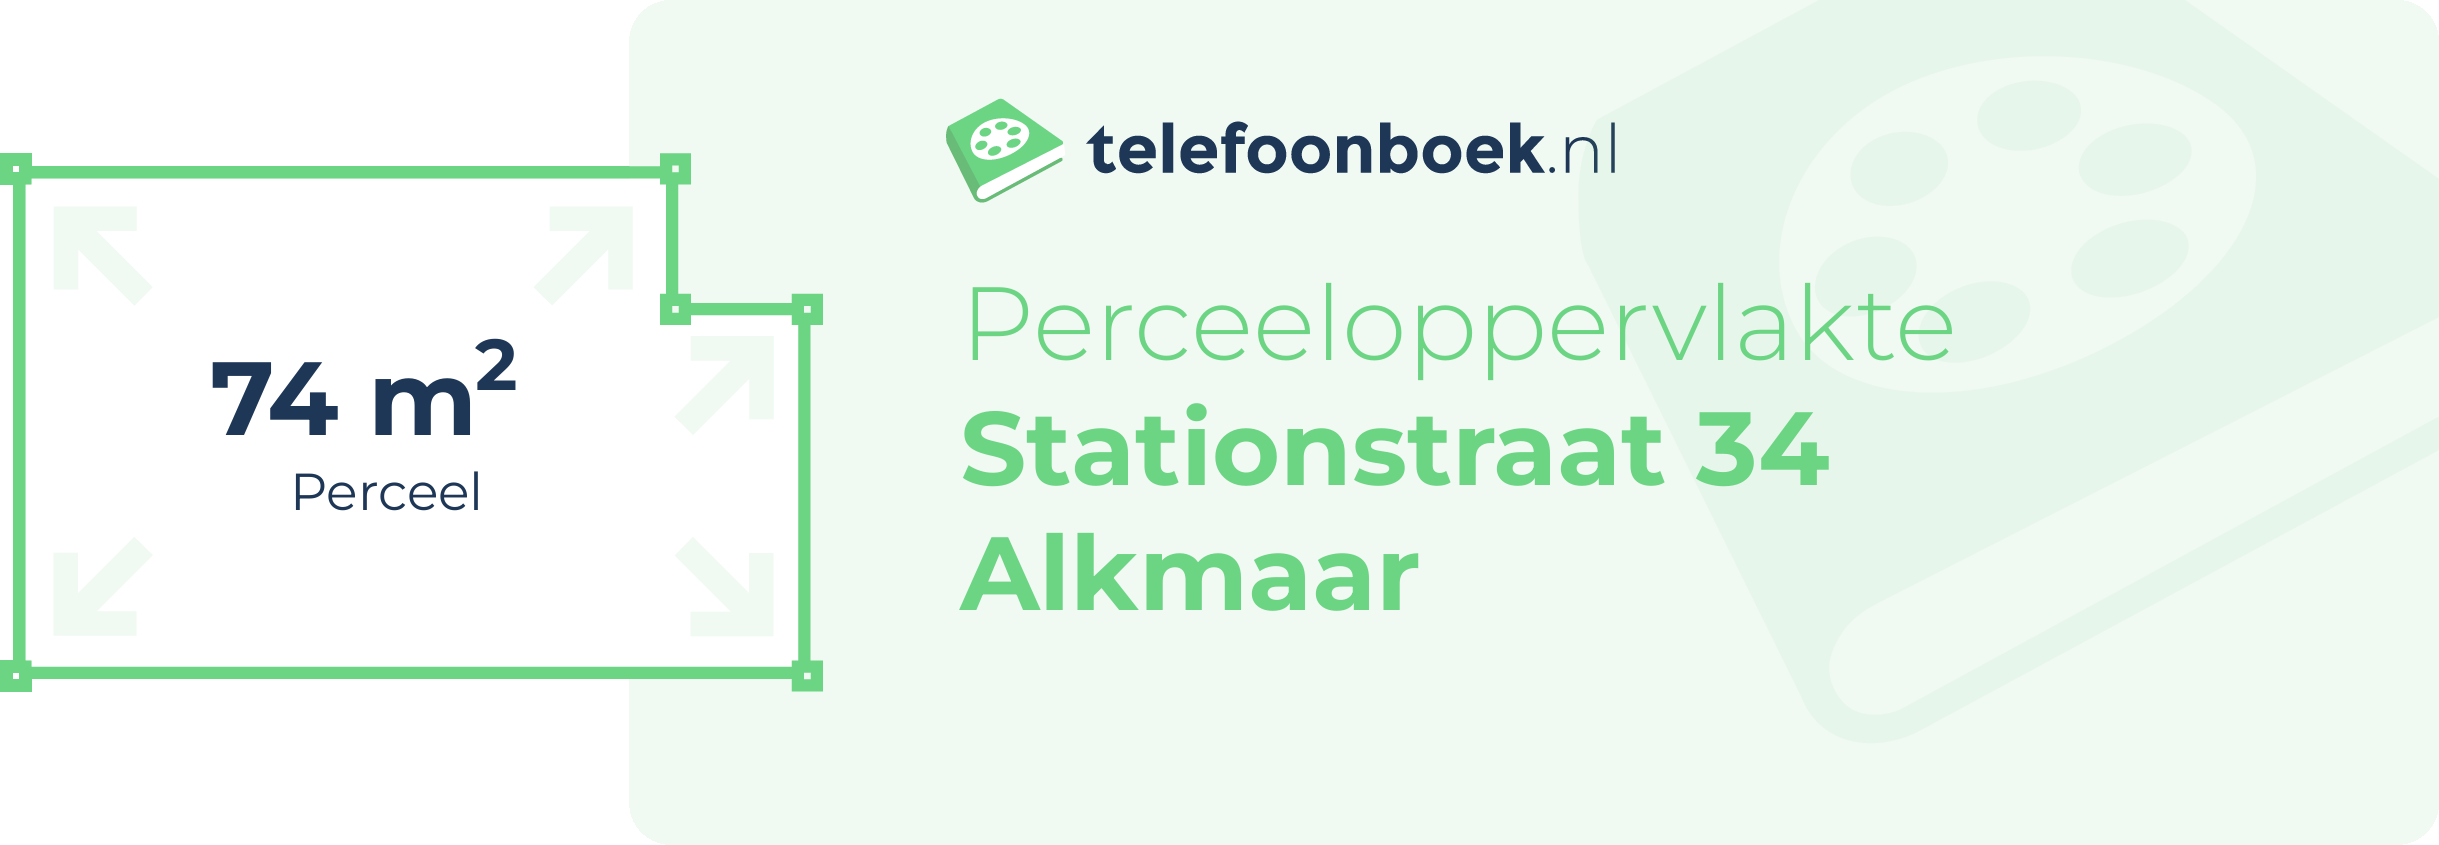 Perceeloppervlakte Stationstraat 34 Alkmaar